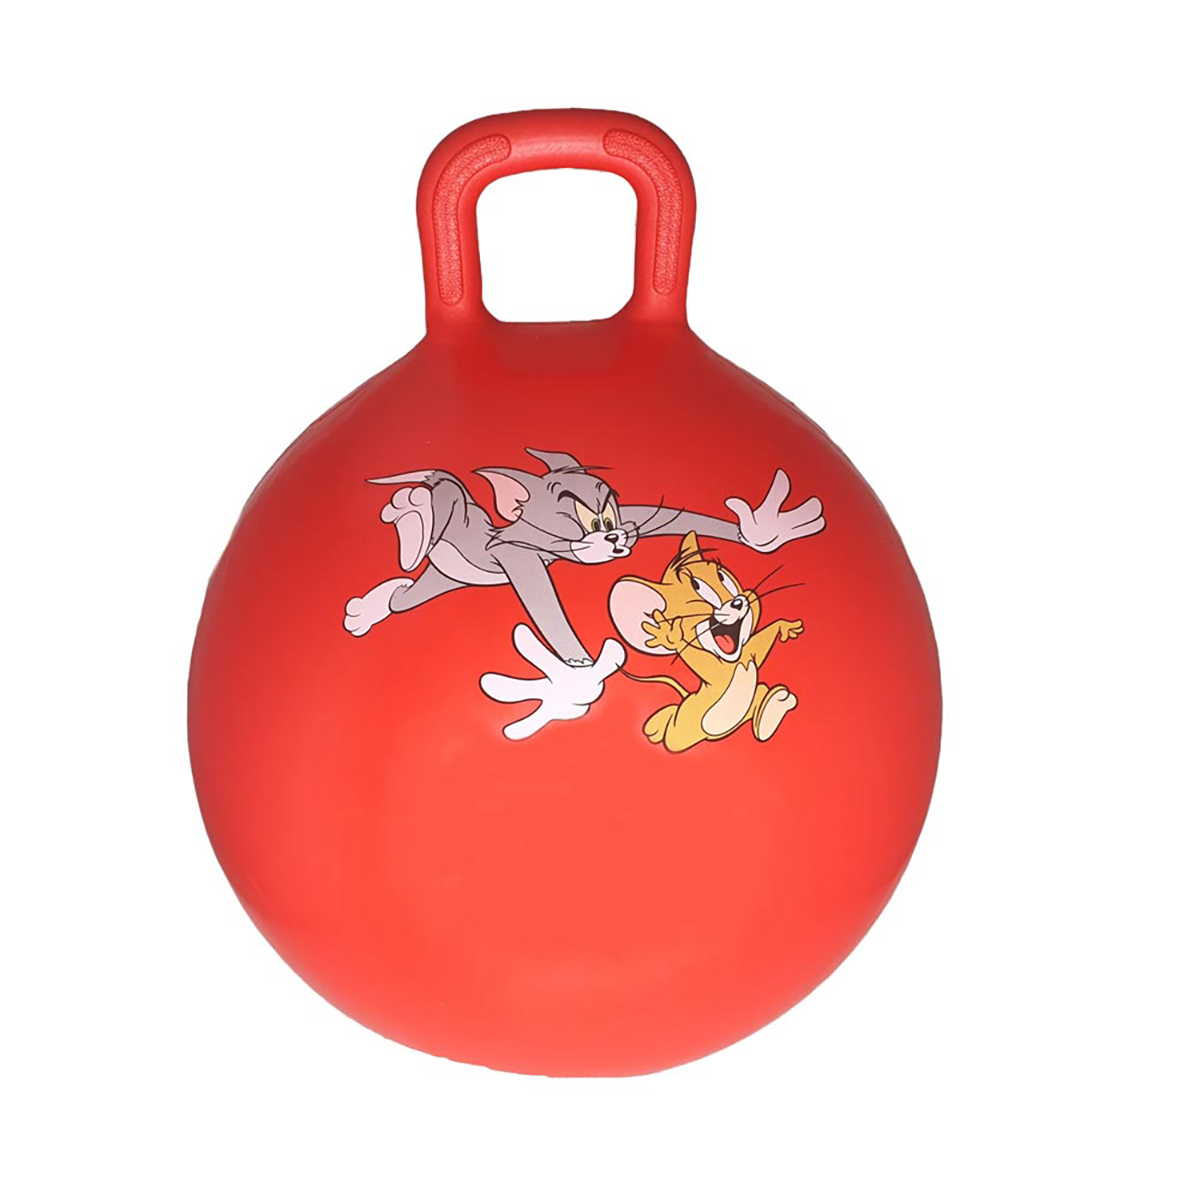 NOON Hüpfball Tom Jerry, 45 Spielset mehrfarbig cm und rot